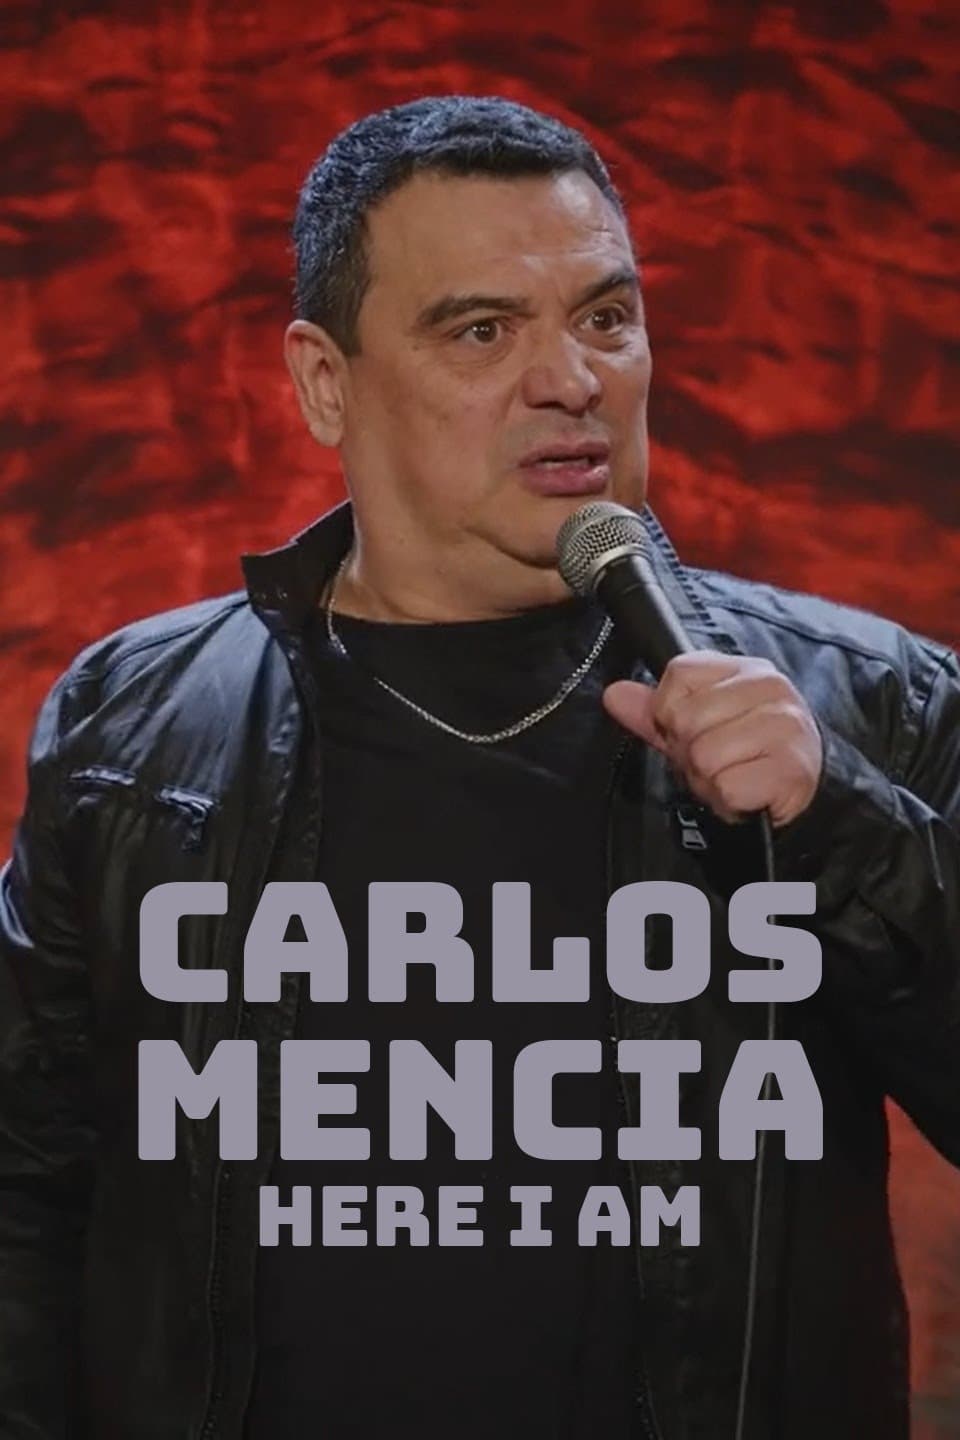 Carlos Mencia: Here I Am